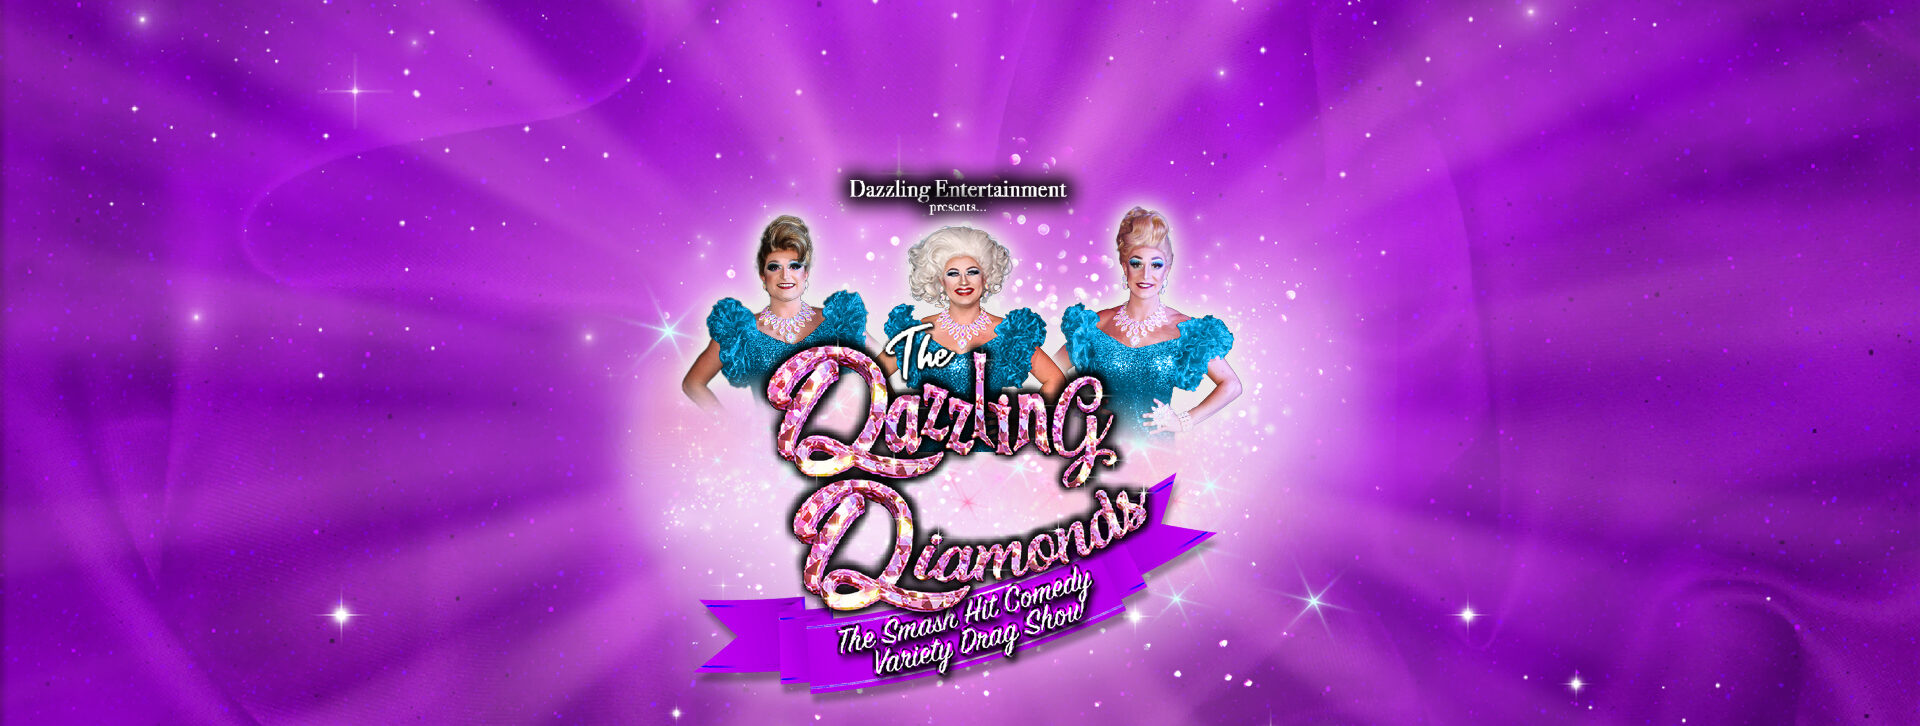 The Dazzling Diamonds – Comedy Drag Show